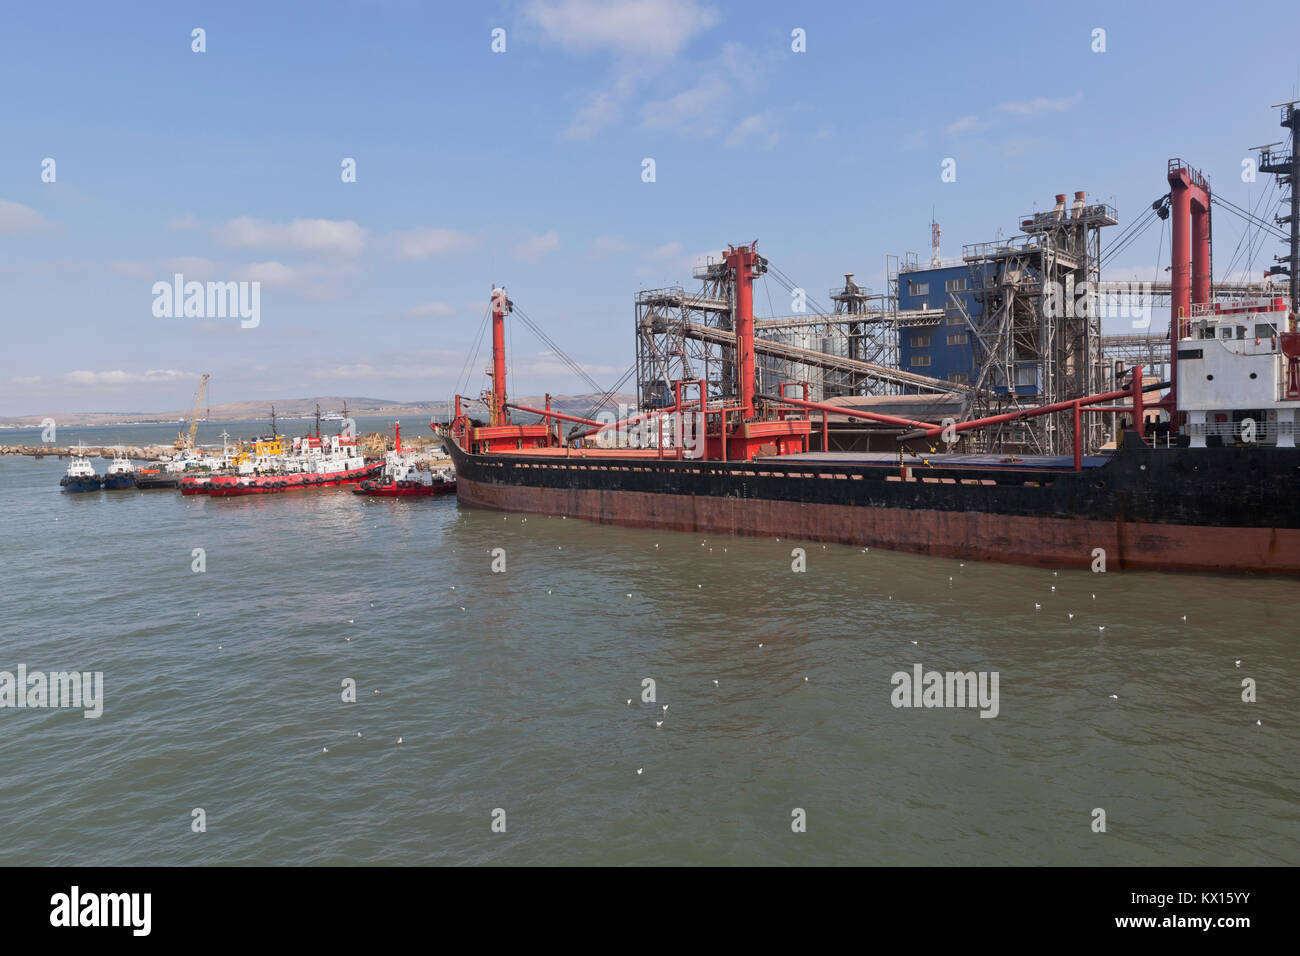 Kosa Chushka, Temryuk district, Krasnodar region, Russia - July 18, 2017: MF ROSE universal ship in the port of Caucasus Stock Photo